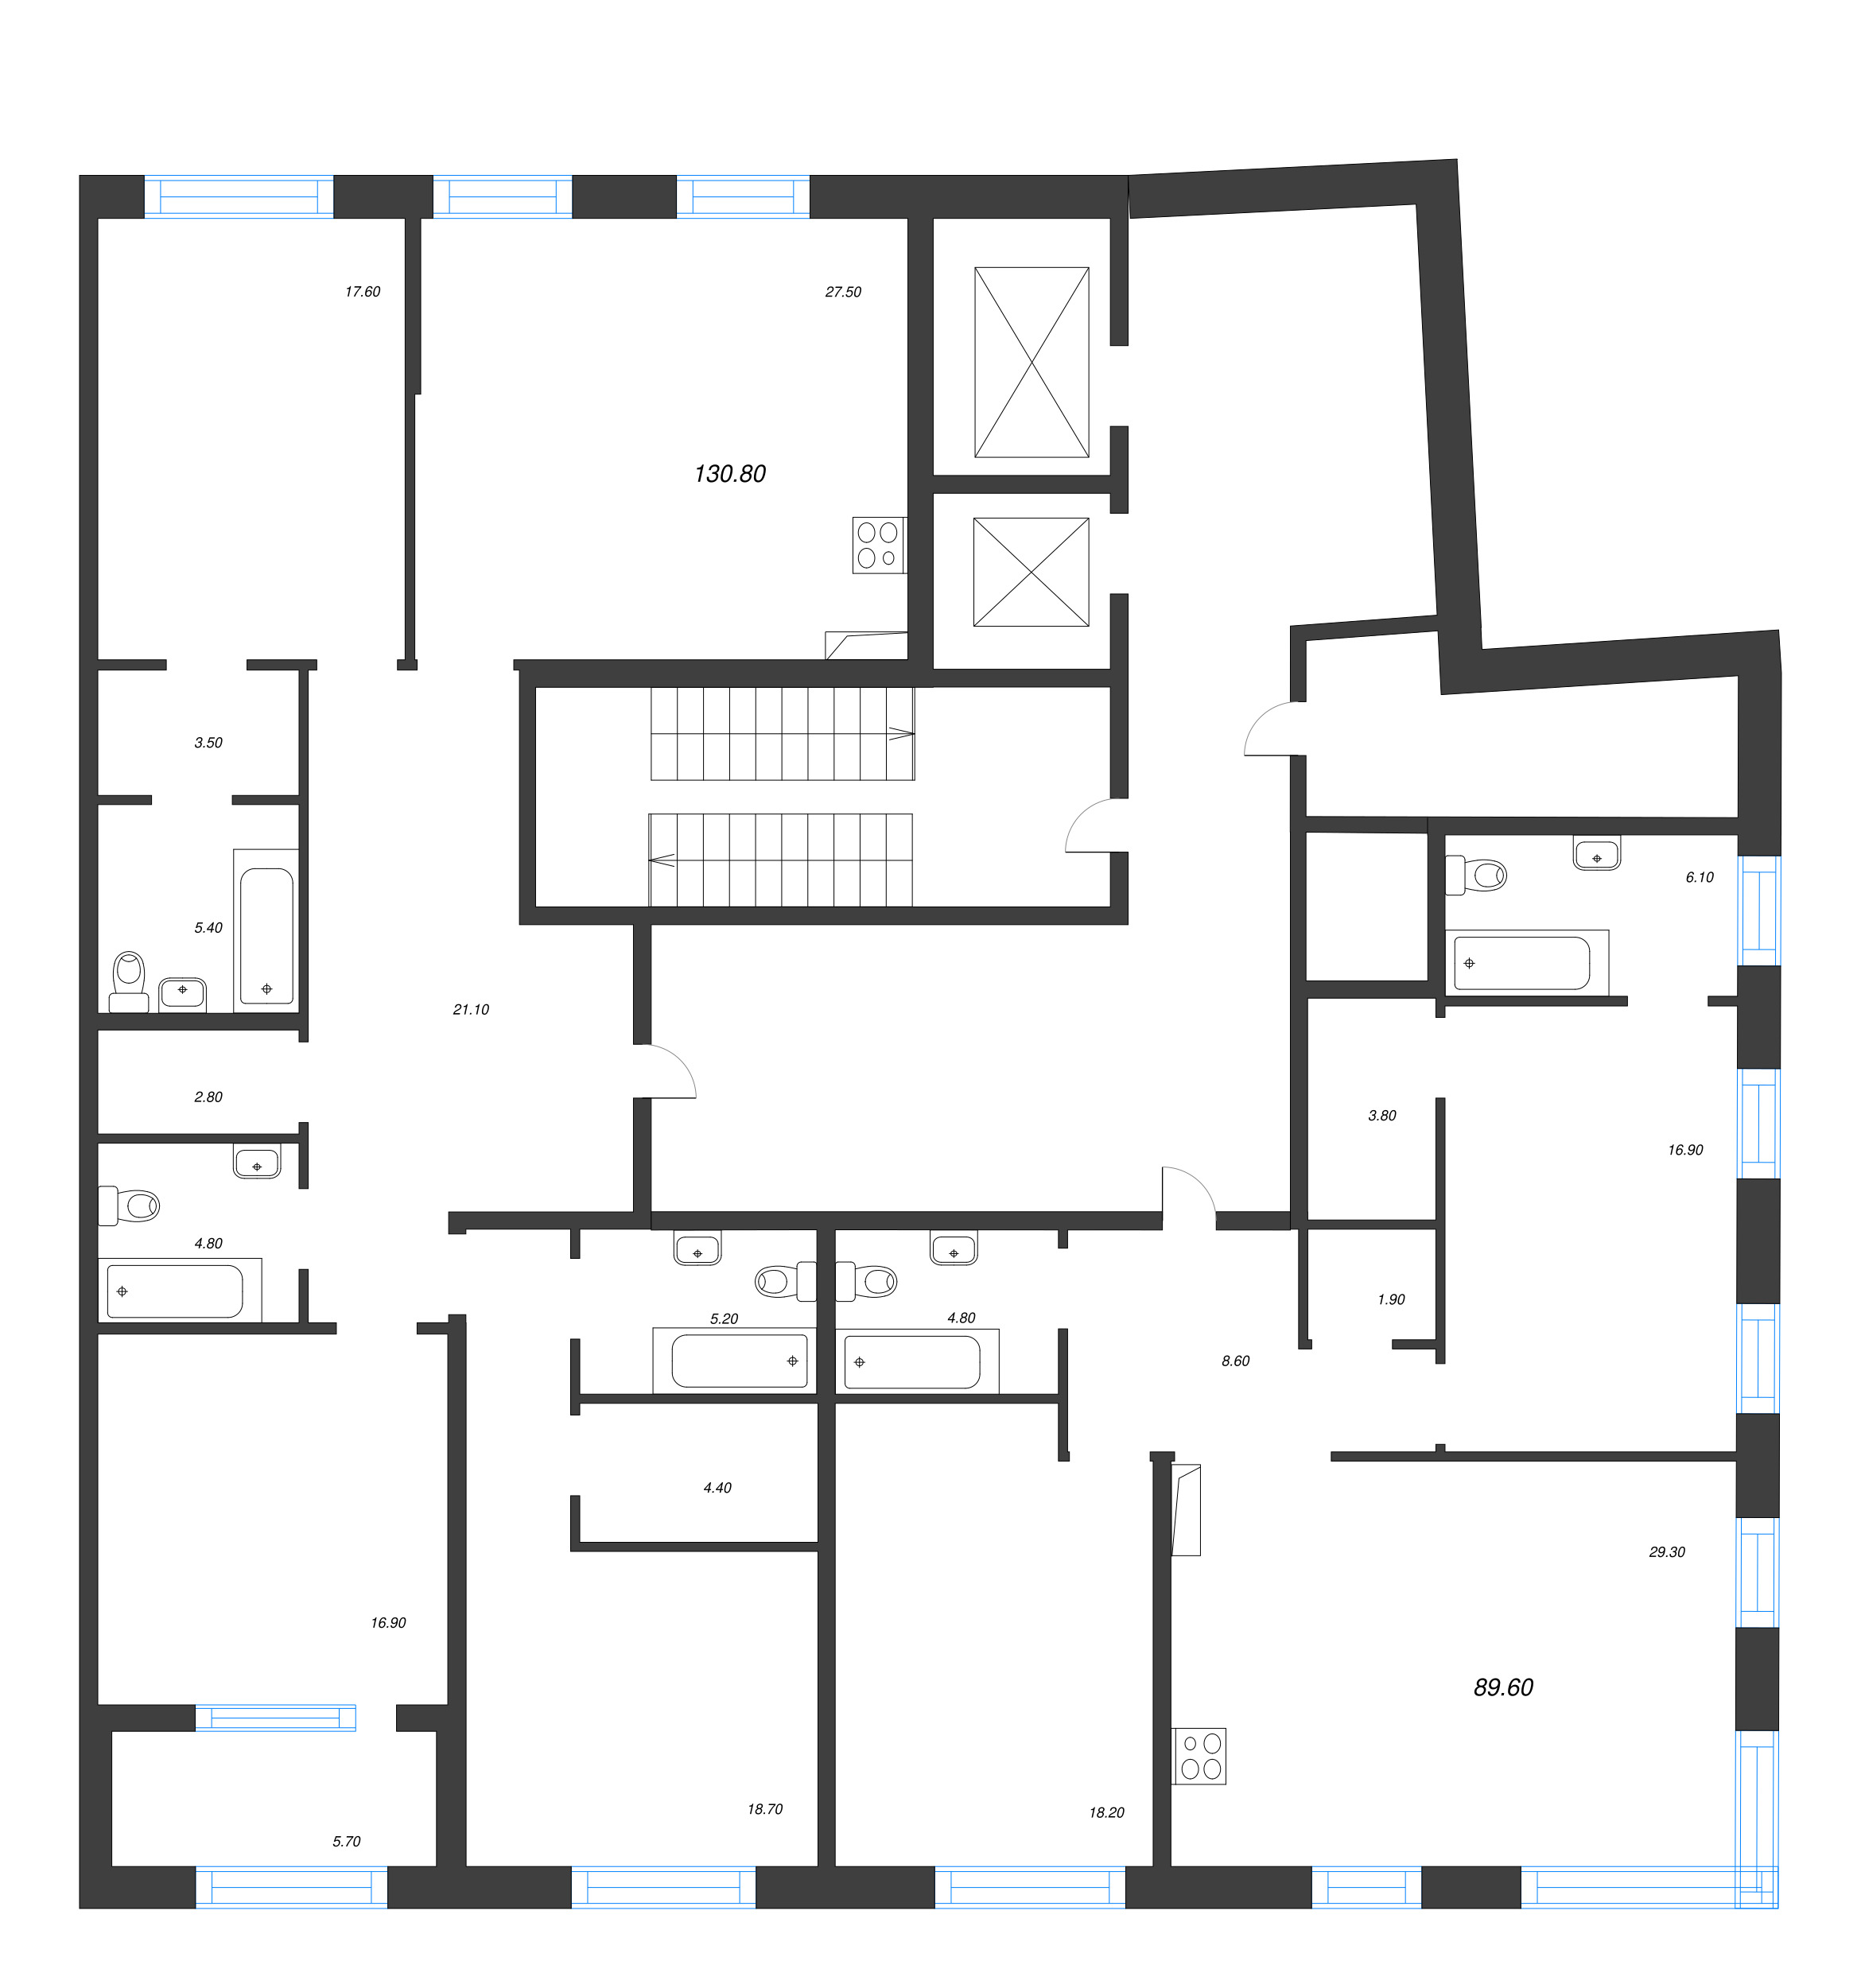 3-комнатная (Евро) квартира, 89.6 м² - планировка этажа